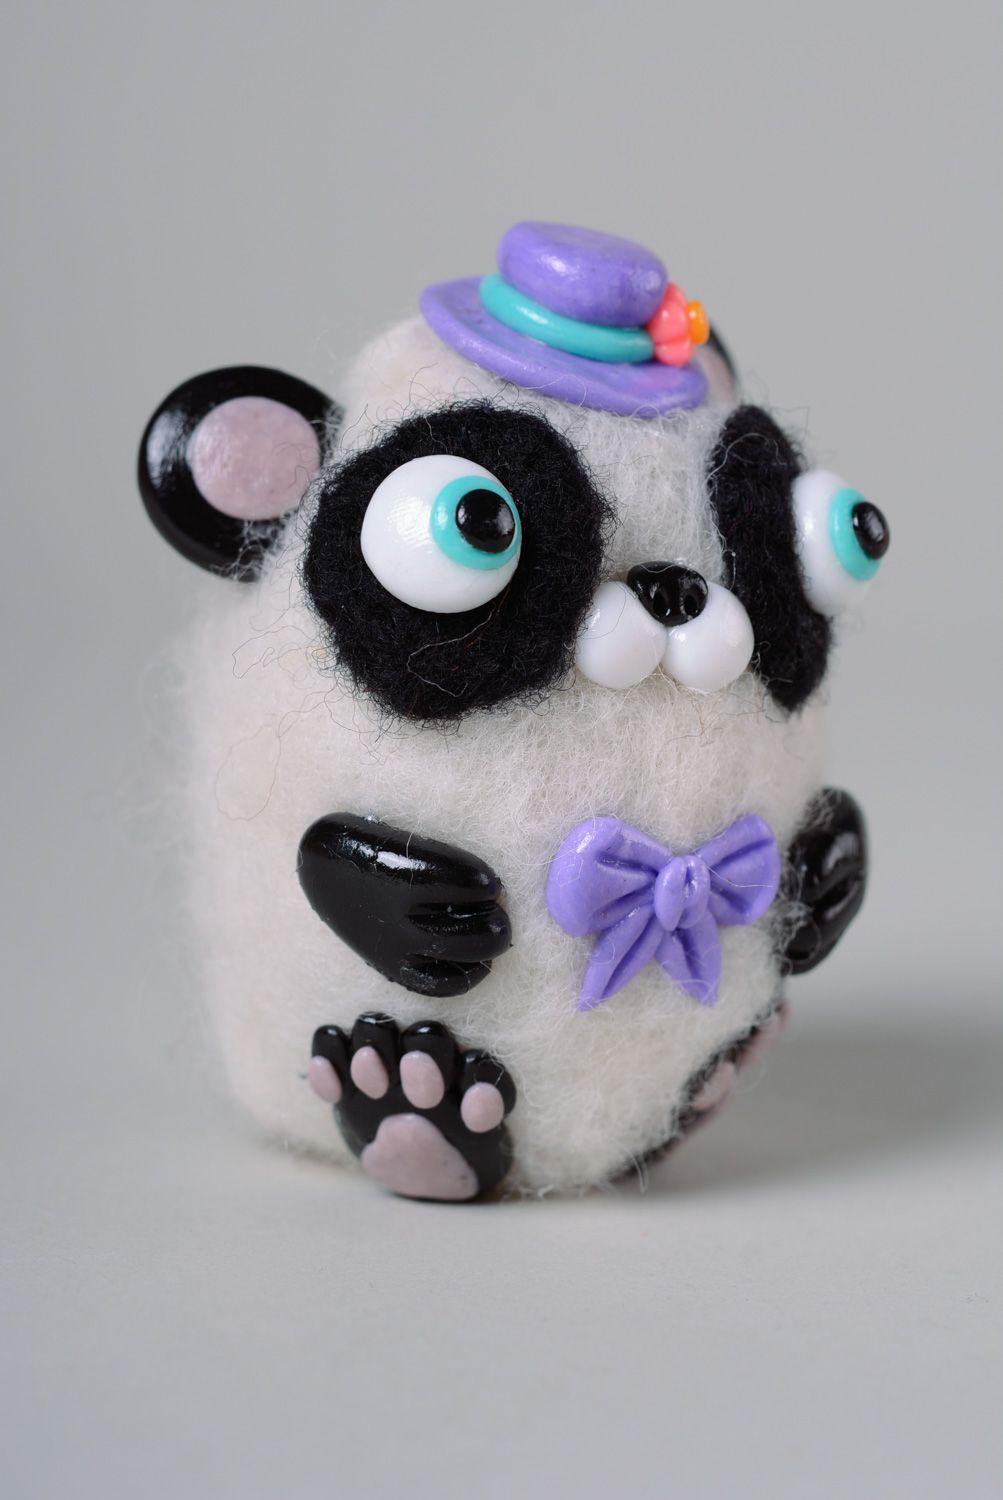 Handmade miniatur Kuscheltier Panda in Trockenfilzen Technik für Kinder foto 2